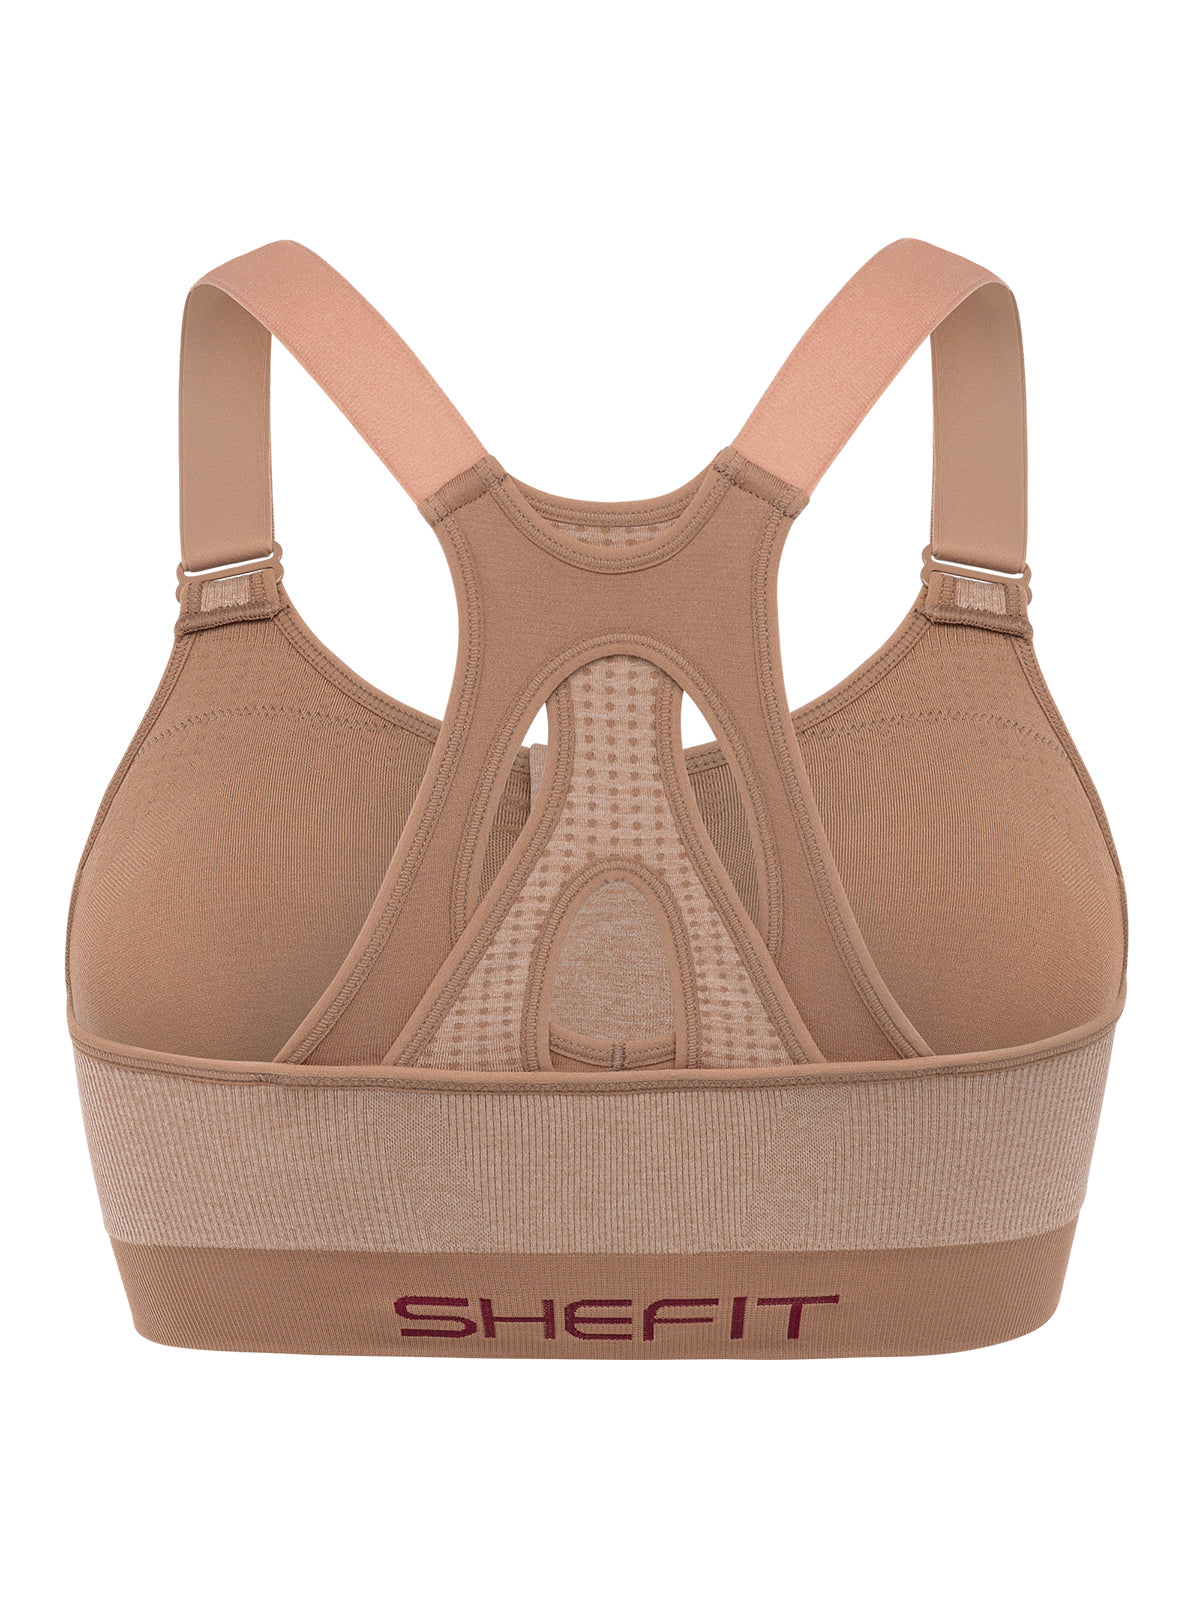 SHEFIT®  Low Impact Sports Bra - Heathered Tan